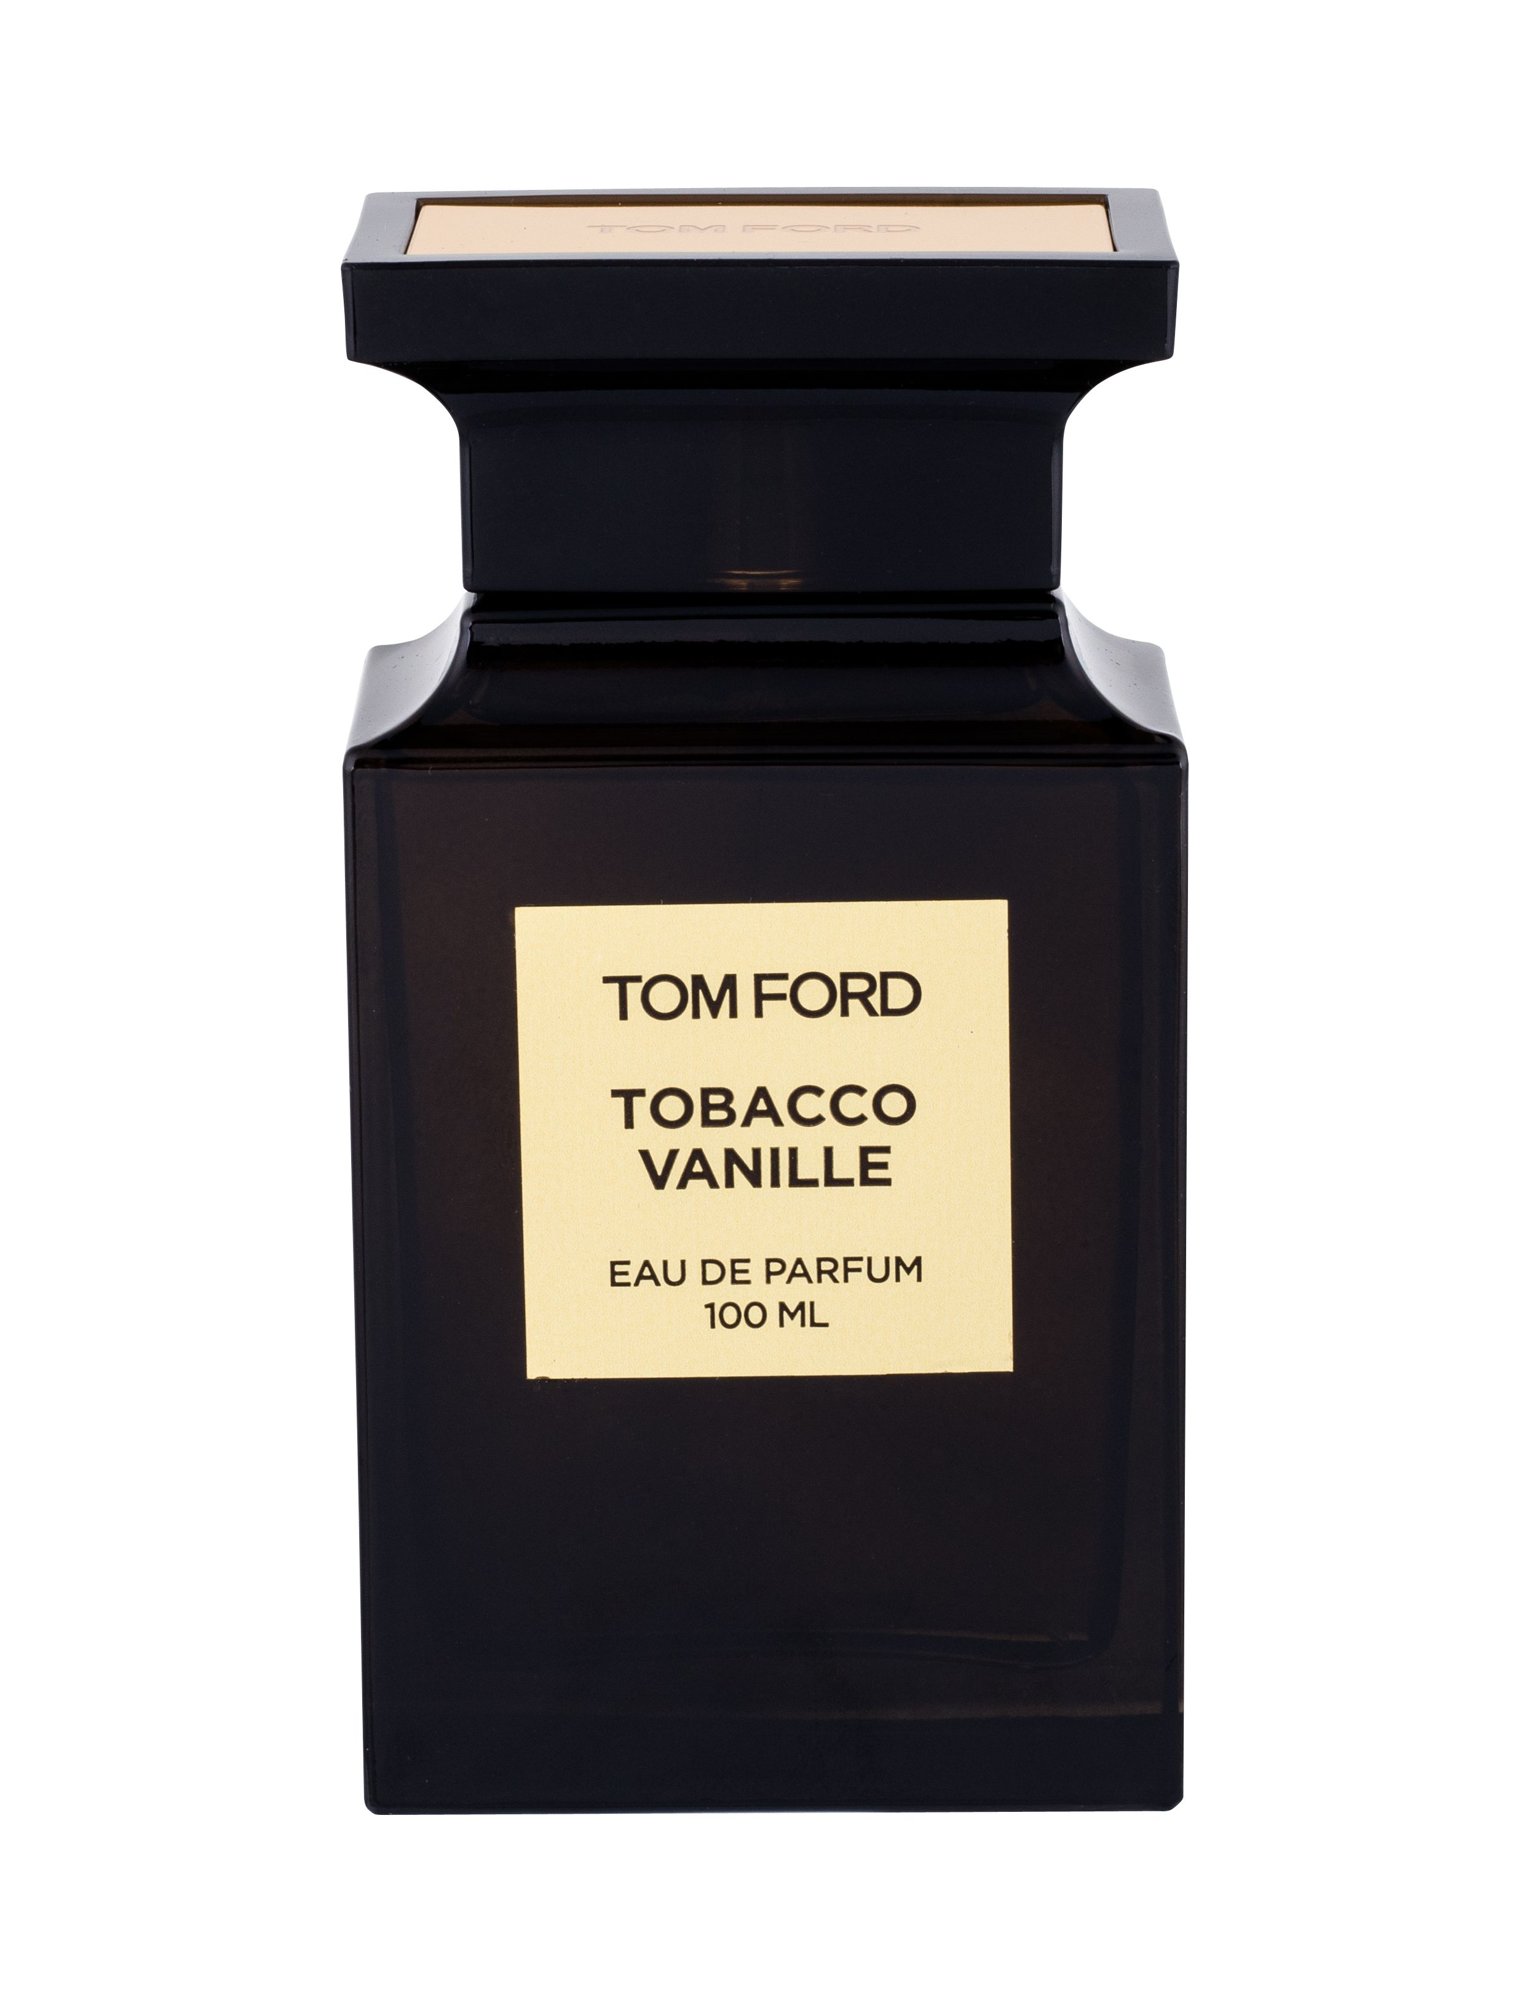 Tom Ford kvepalai: Black Orchid ir kiti - gera kaina